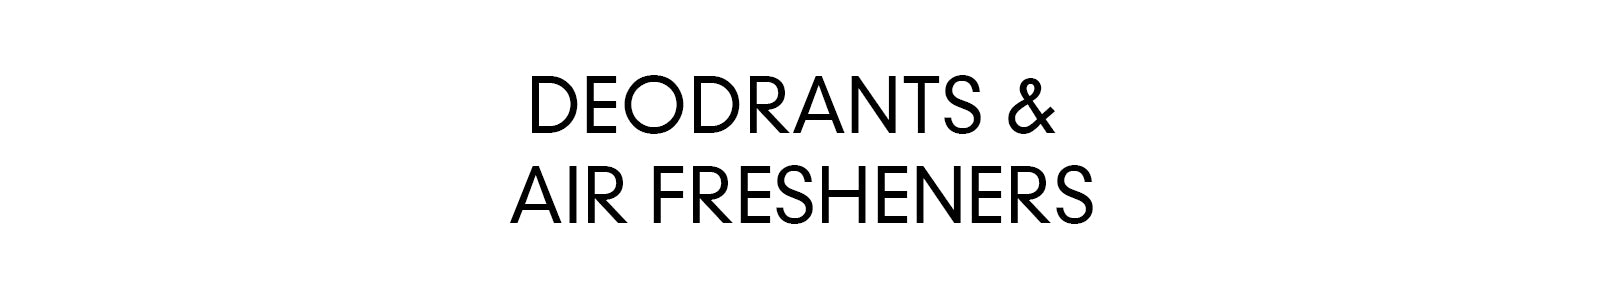 Deodorants & Air Fresheners